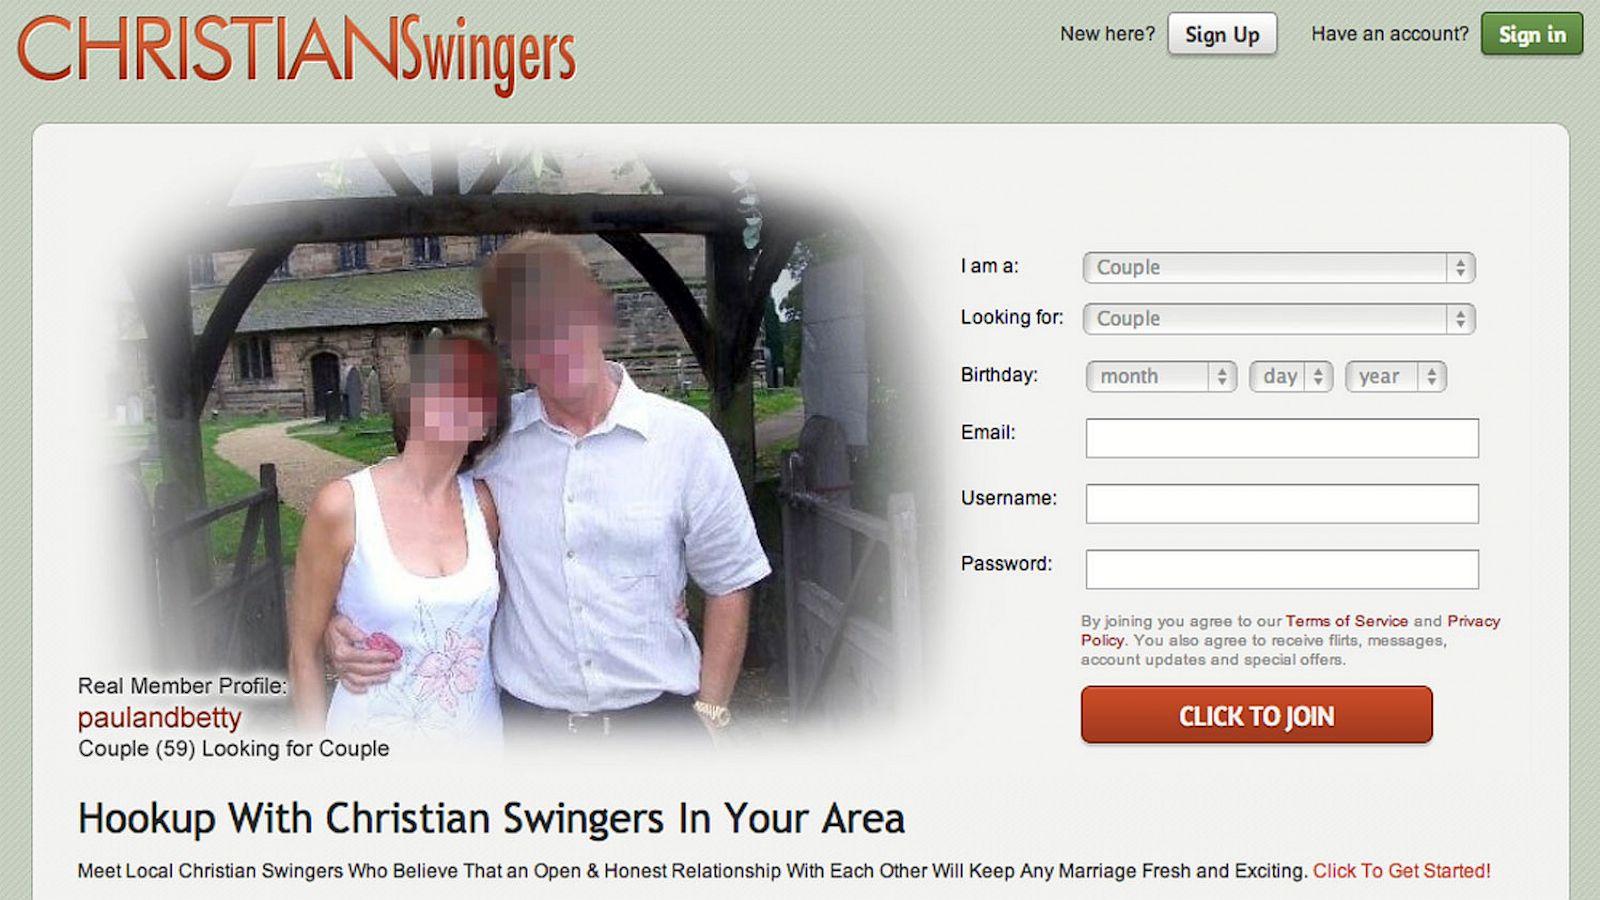 Christian Swingers? Even Progressive